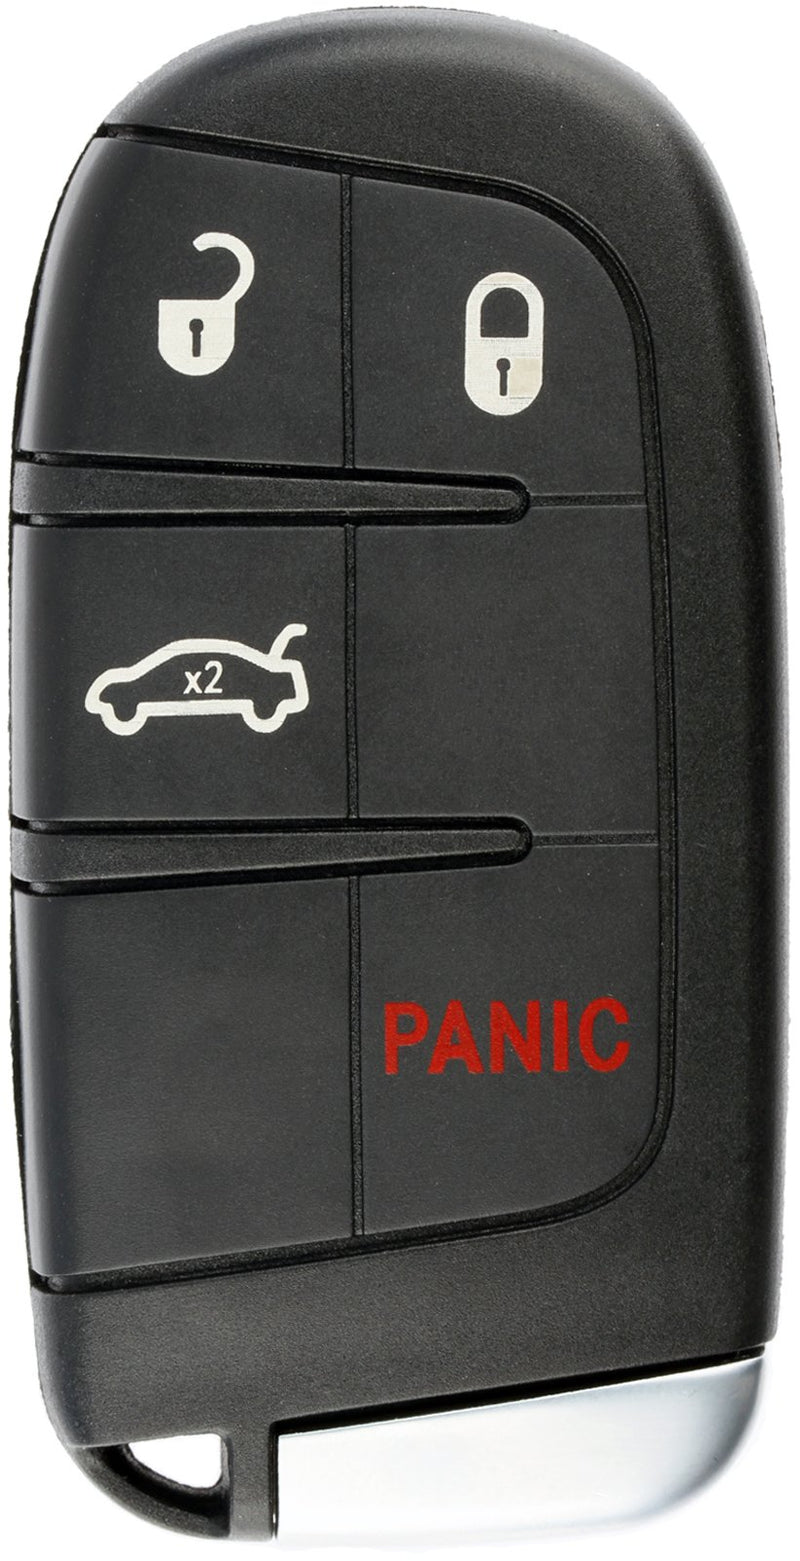  [AUSTRALIA] - KeylessOption Keyless Entry Remote Car Smart Key Fob for Dodge Charger Challenger Dart Journey Chrysler 300 M3N-40821302 1x